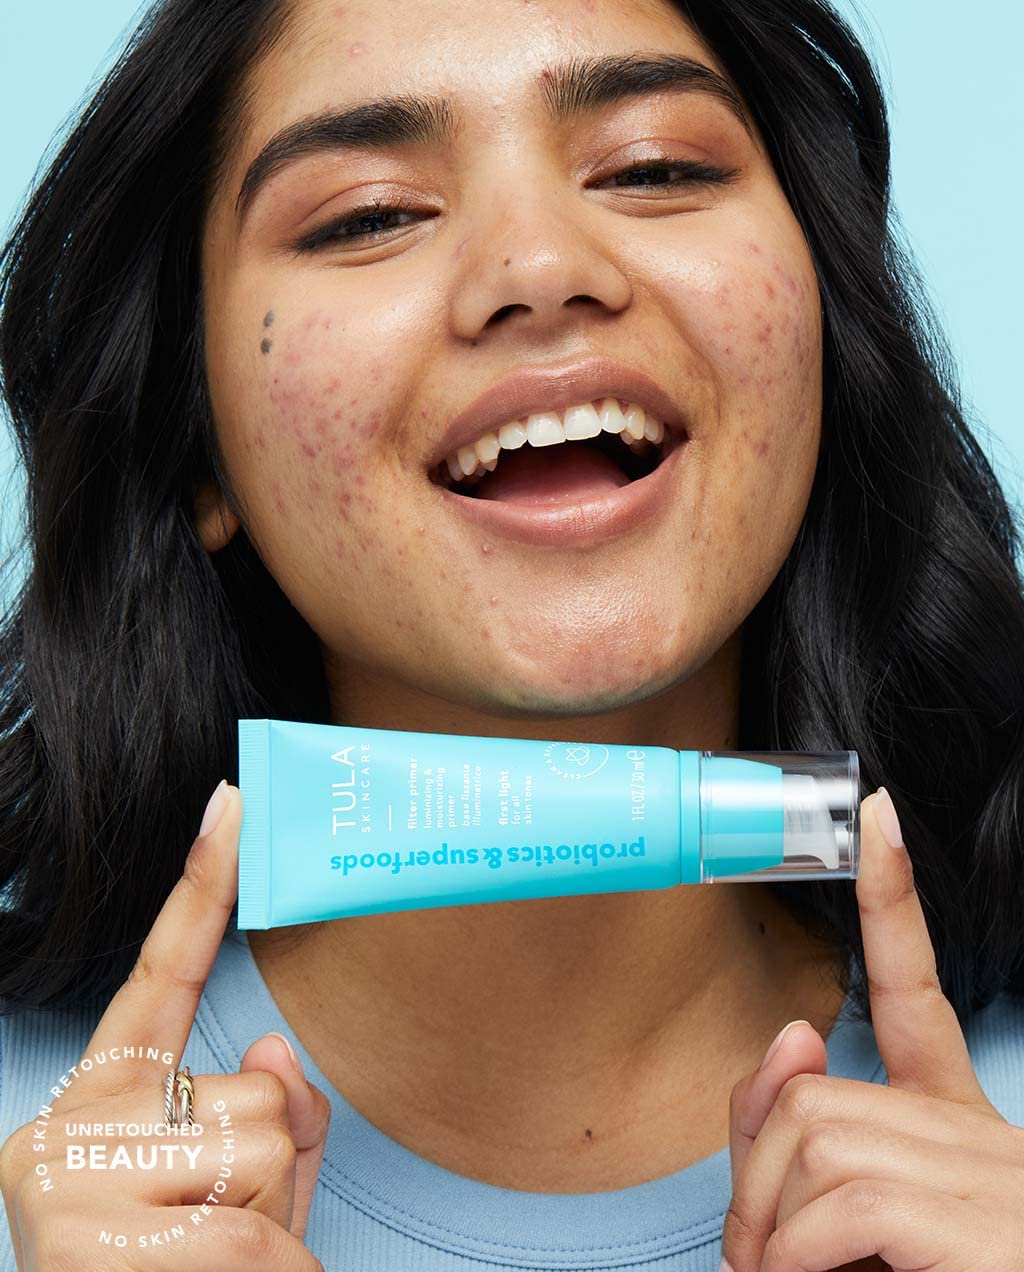 TULA Skin Care Face Filter Blurring and Moisturizing Primer - Original/Sunrise, Evens the Appearance of Skin Tone & Redness, Hydrates & Improves Makeup Wear, 1fl oz